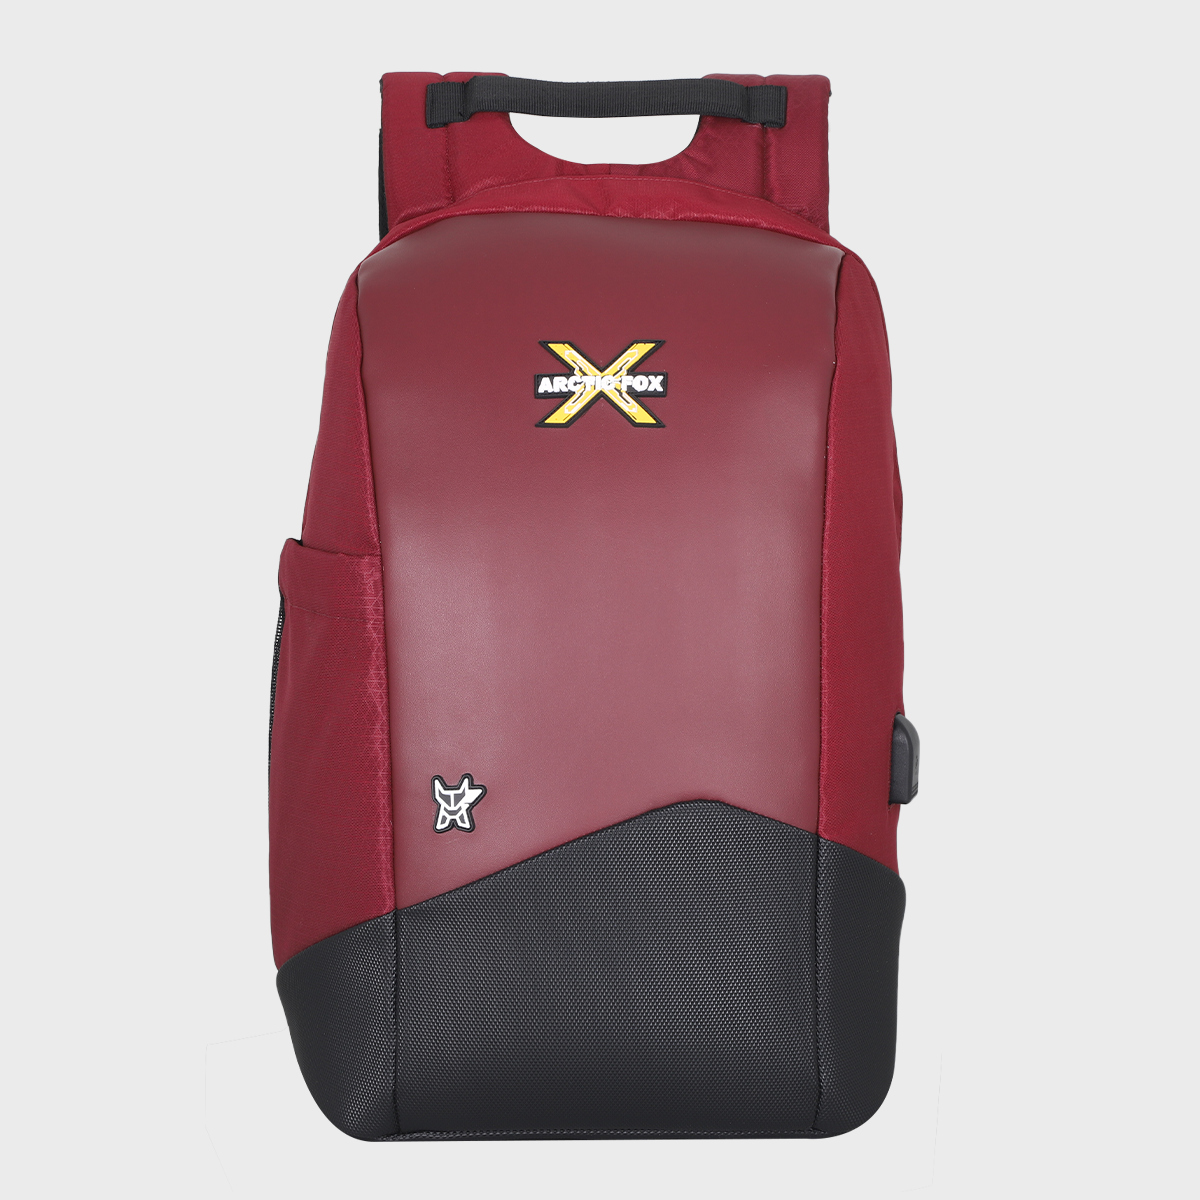 Arctic Fox Slope -Maverick Anti-Theft Tawny Port Laptop bag and Backpack